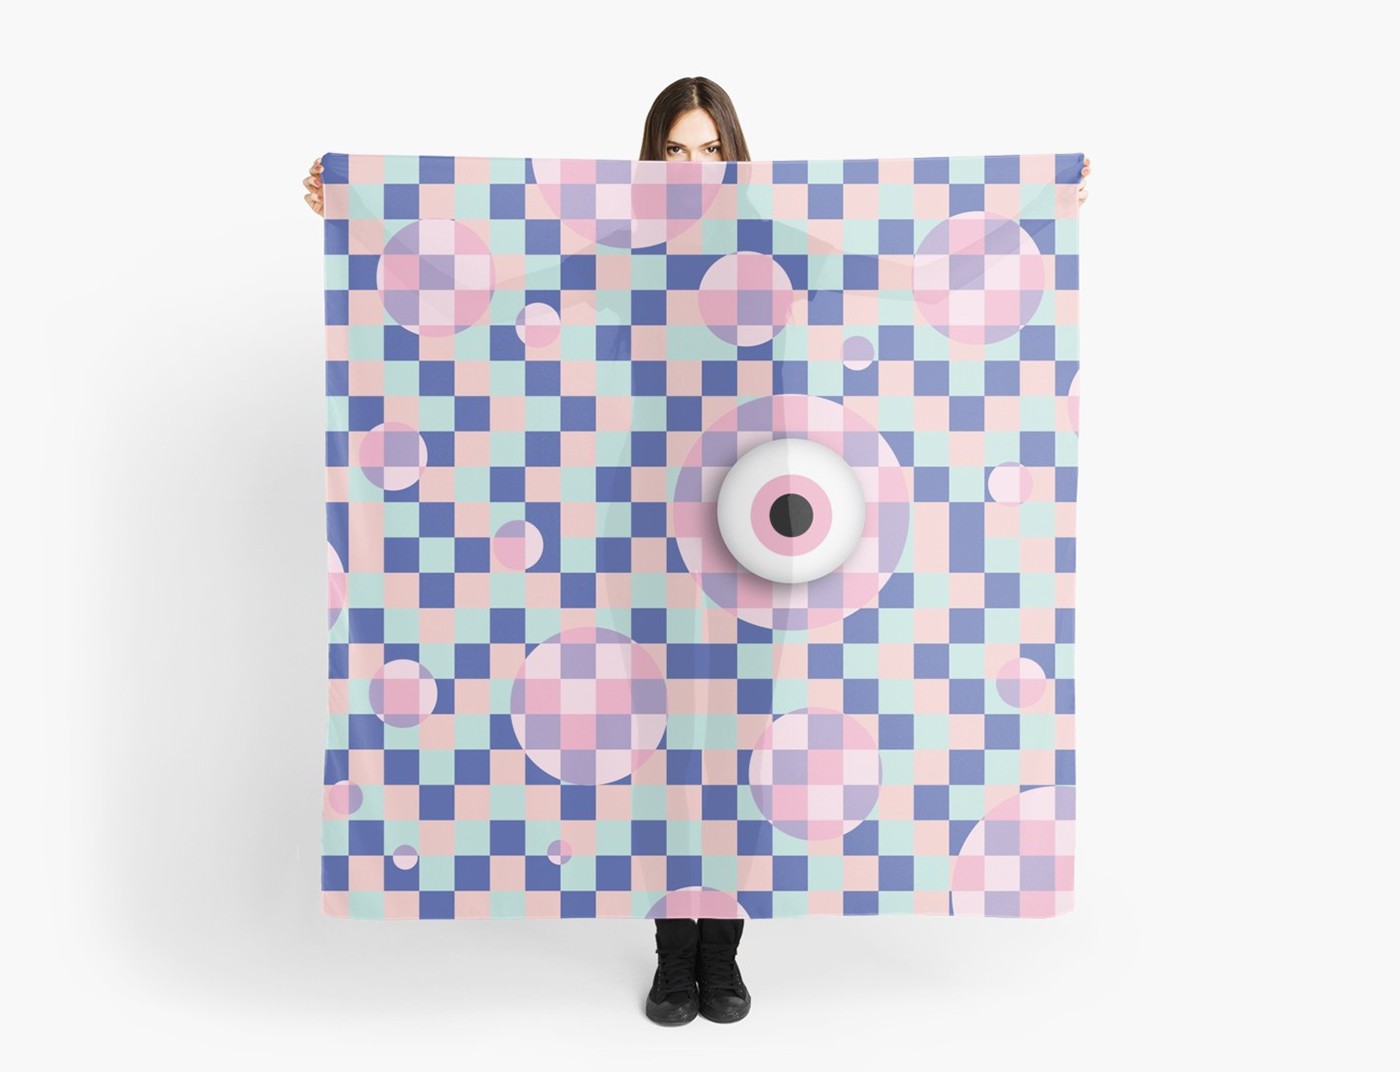 graphic art surreal eyeball pattern mosaic squares prints tiles